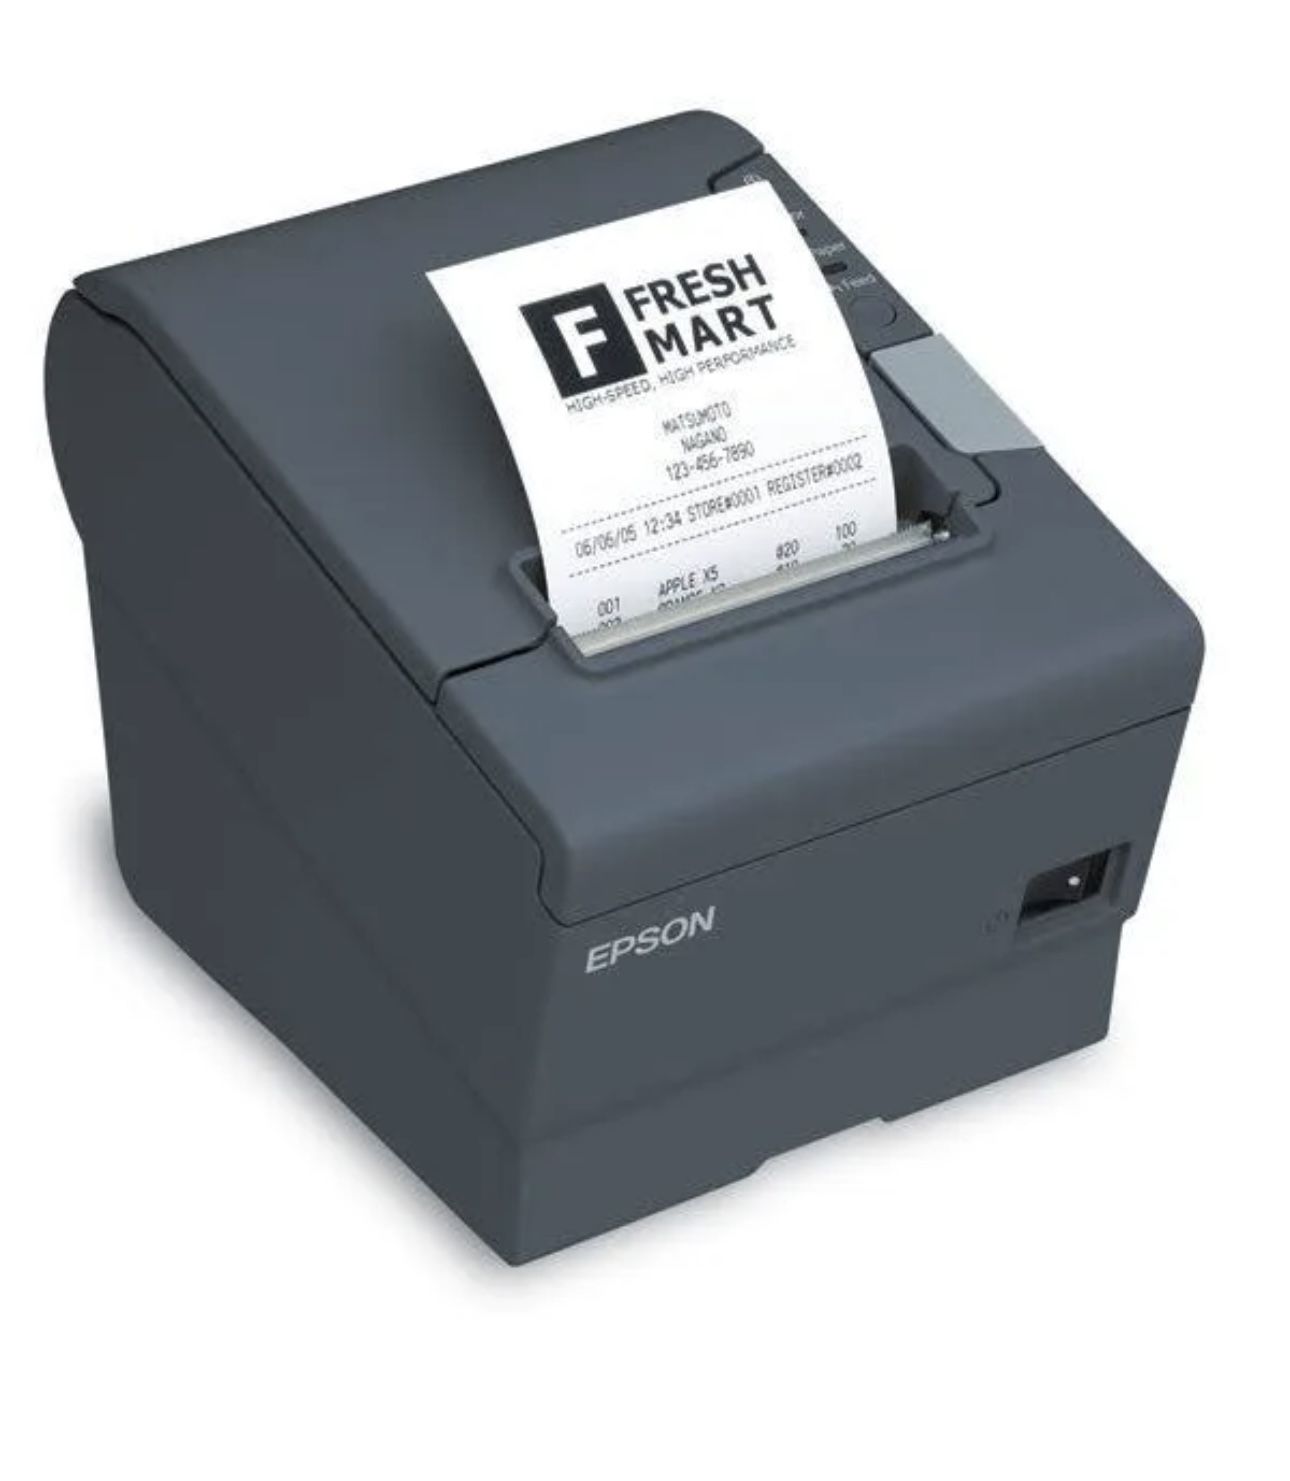 Epson Thermal Receipt Printer New In Box 